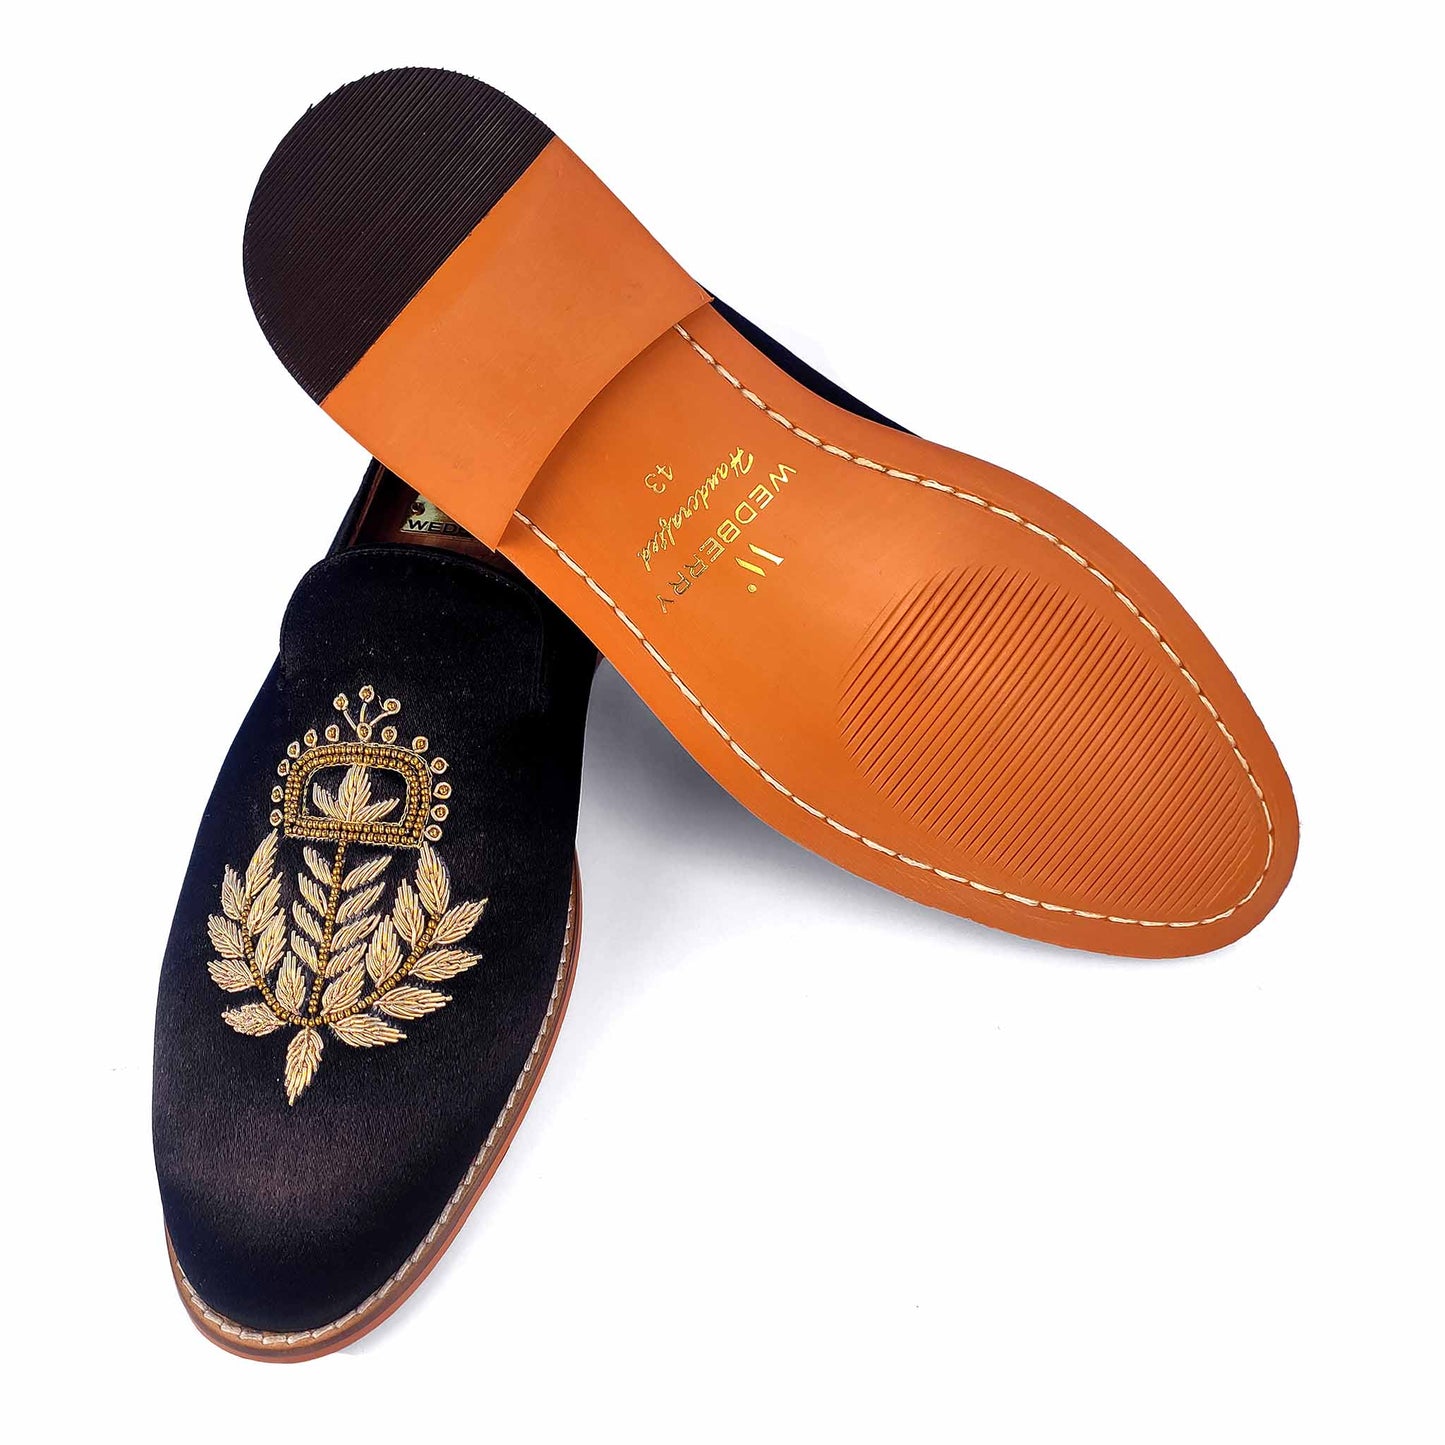 Black Satin Silk with Golden Zardozi Handwork Loafers for Men